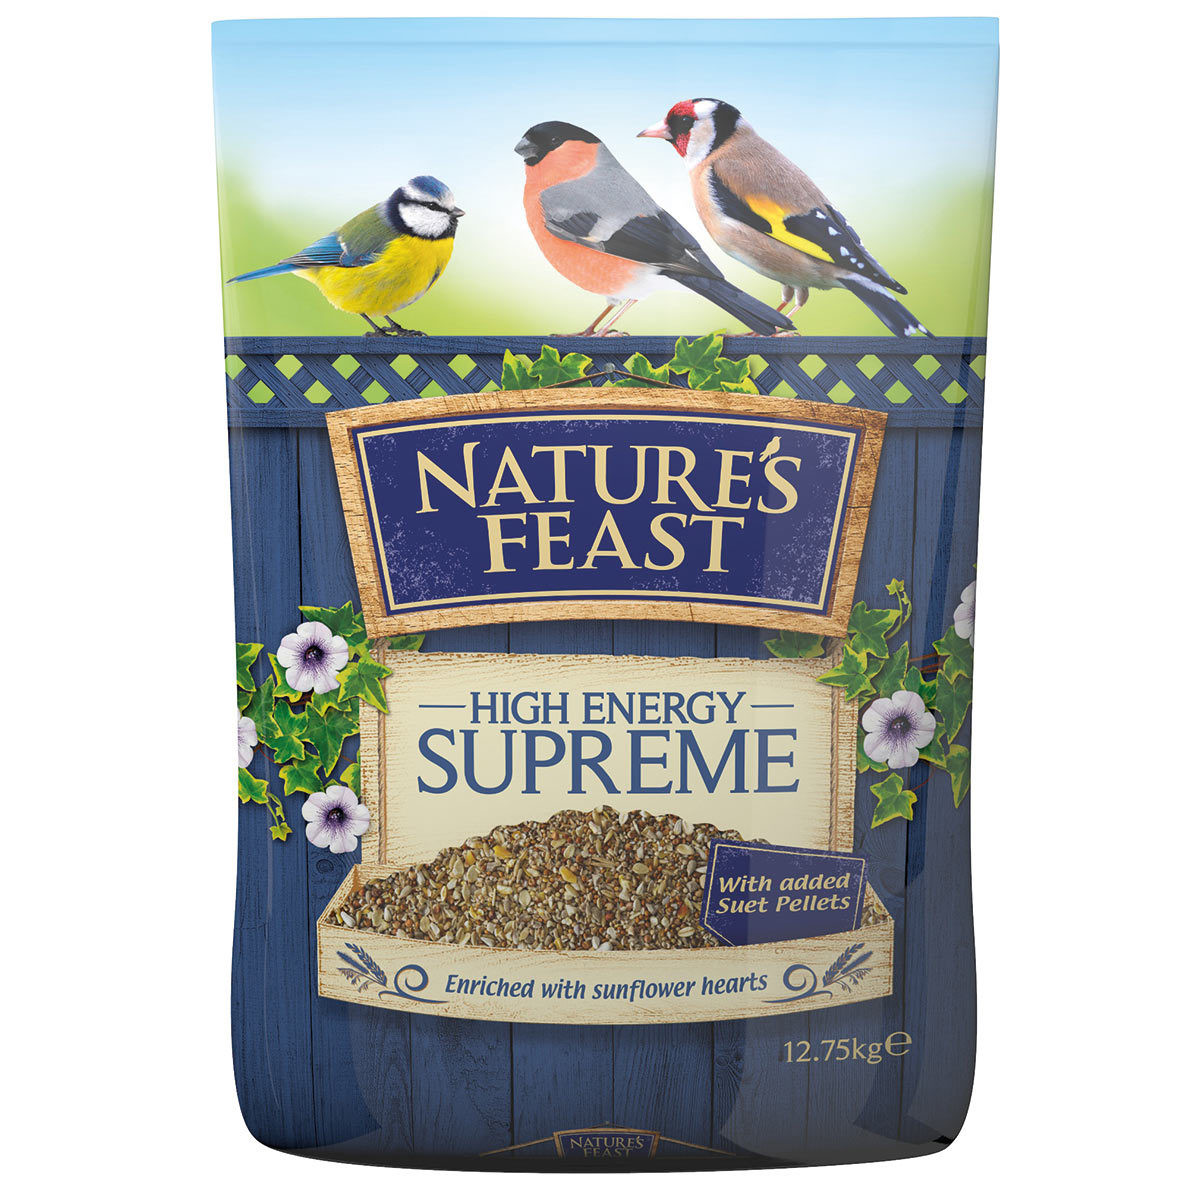 Natures Feast Supreme 8 Seed Blend Bird Food 12.75 kg